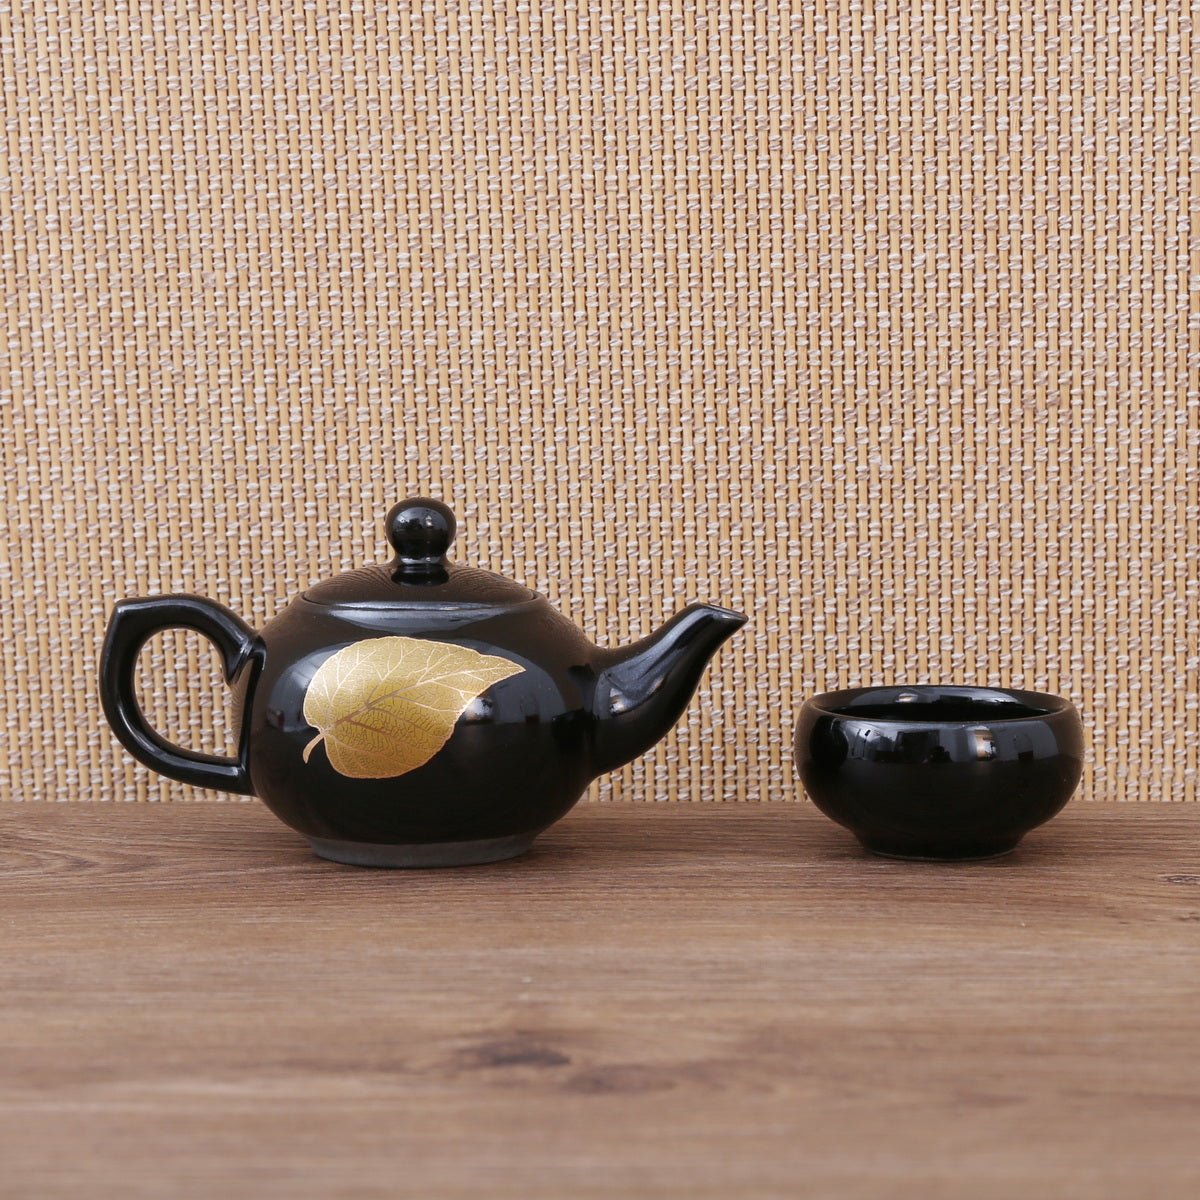 Hand drawn Gold Leaf Black Jian Zhan Porcelain Gift Tea Set - Taishan Tea Club